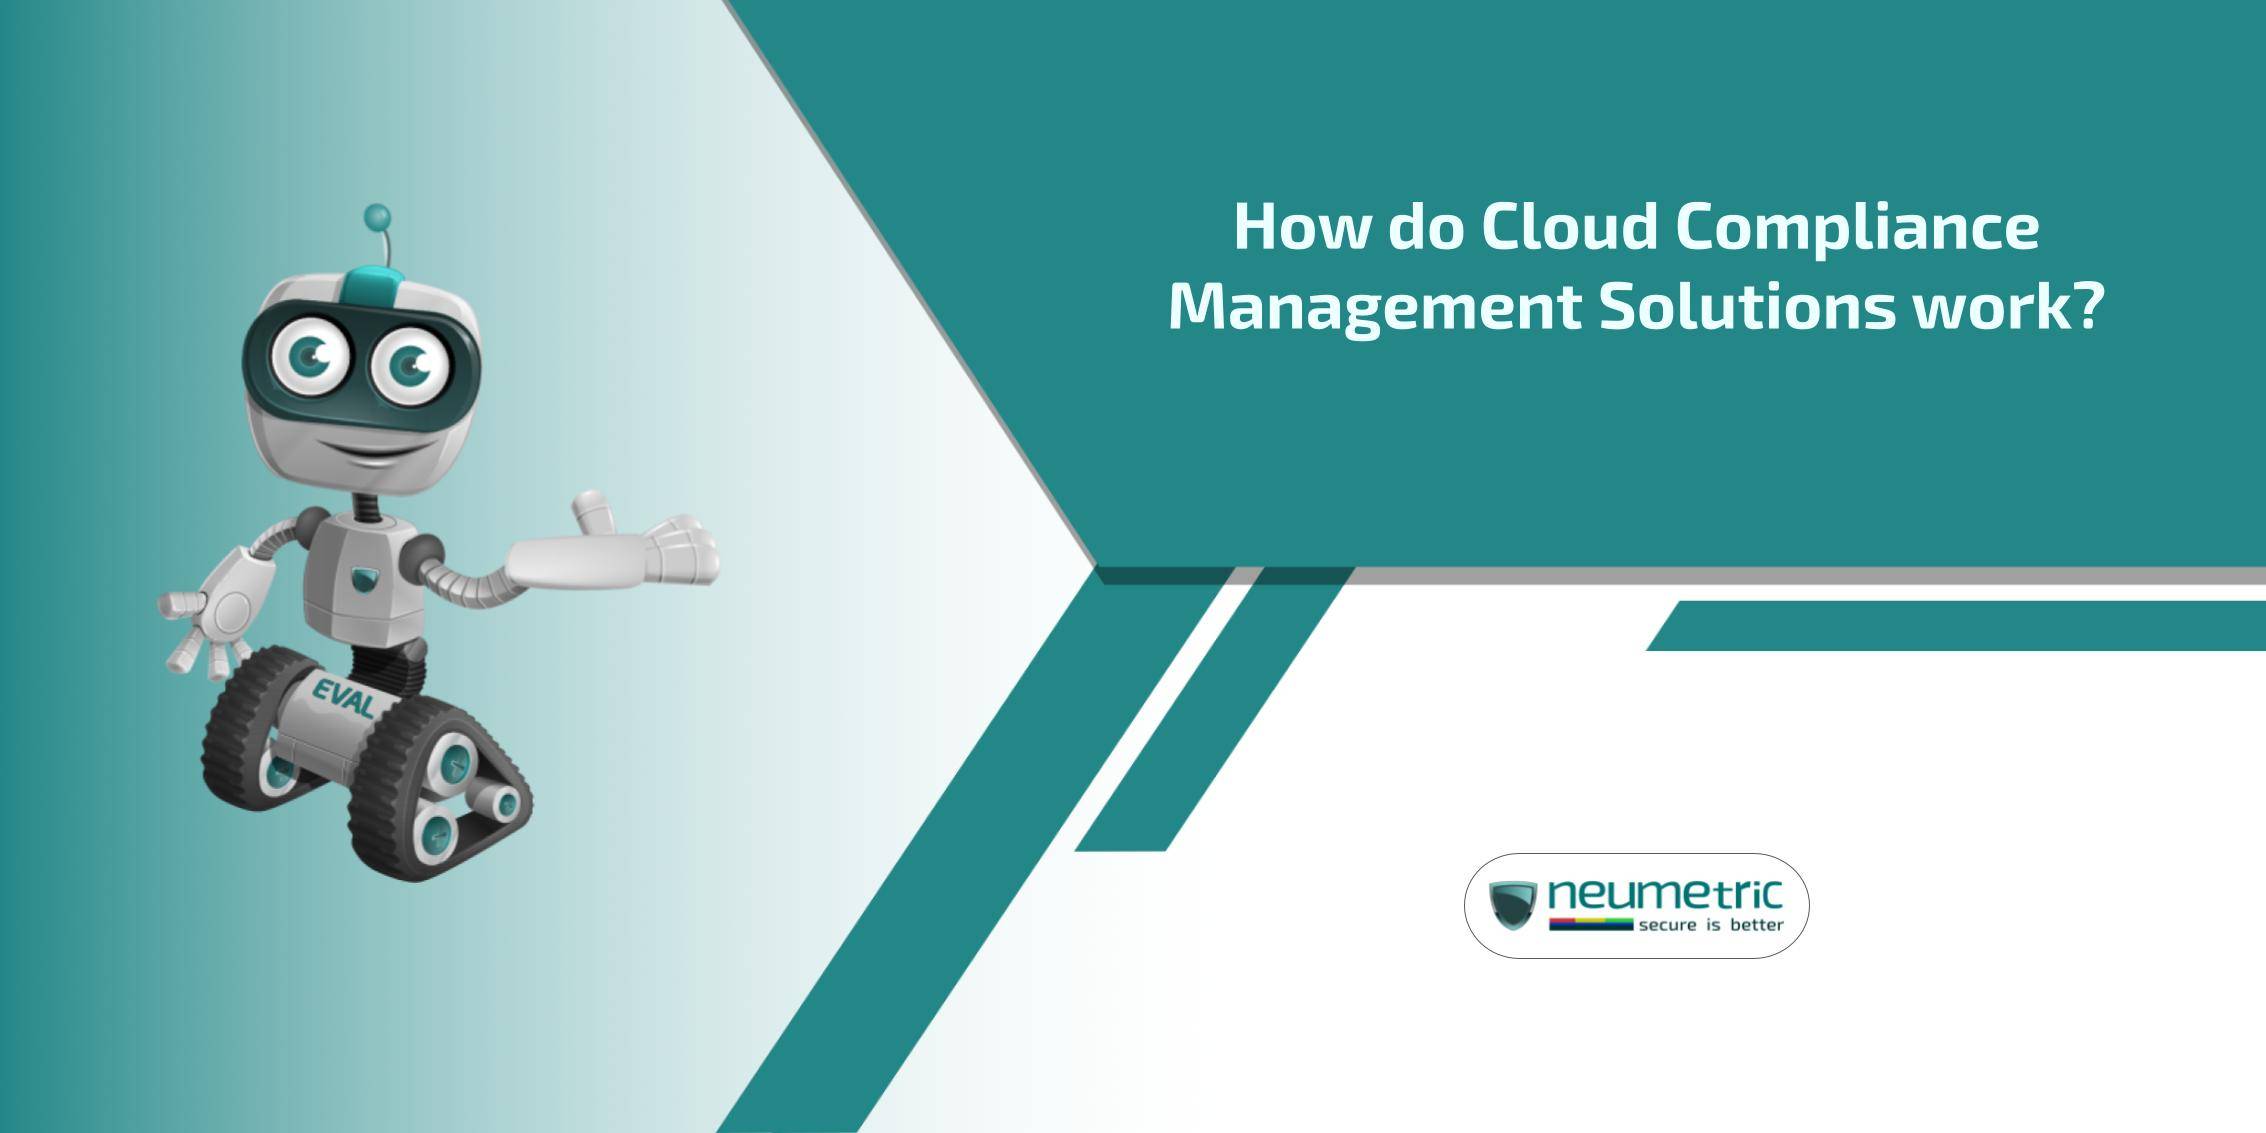 How do Cloud Compliance Management Solutions work?